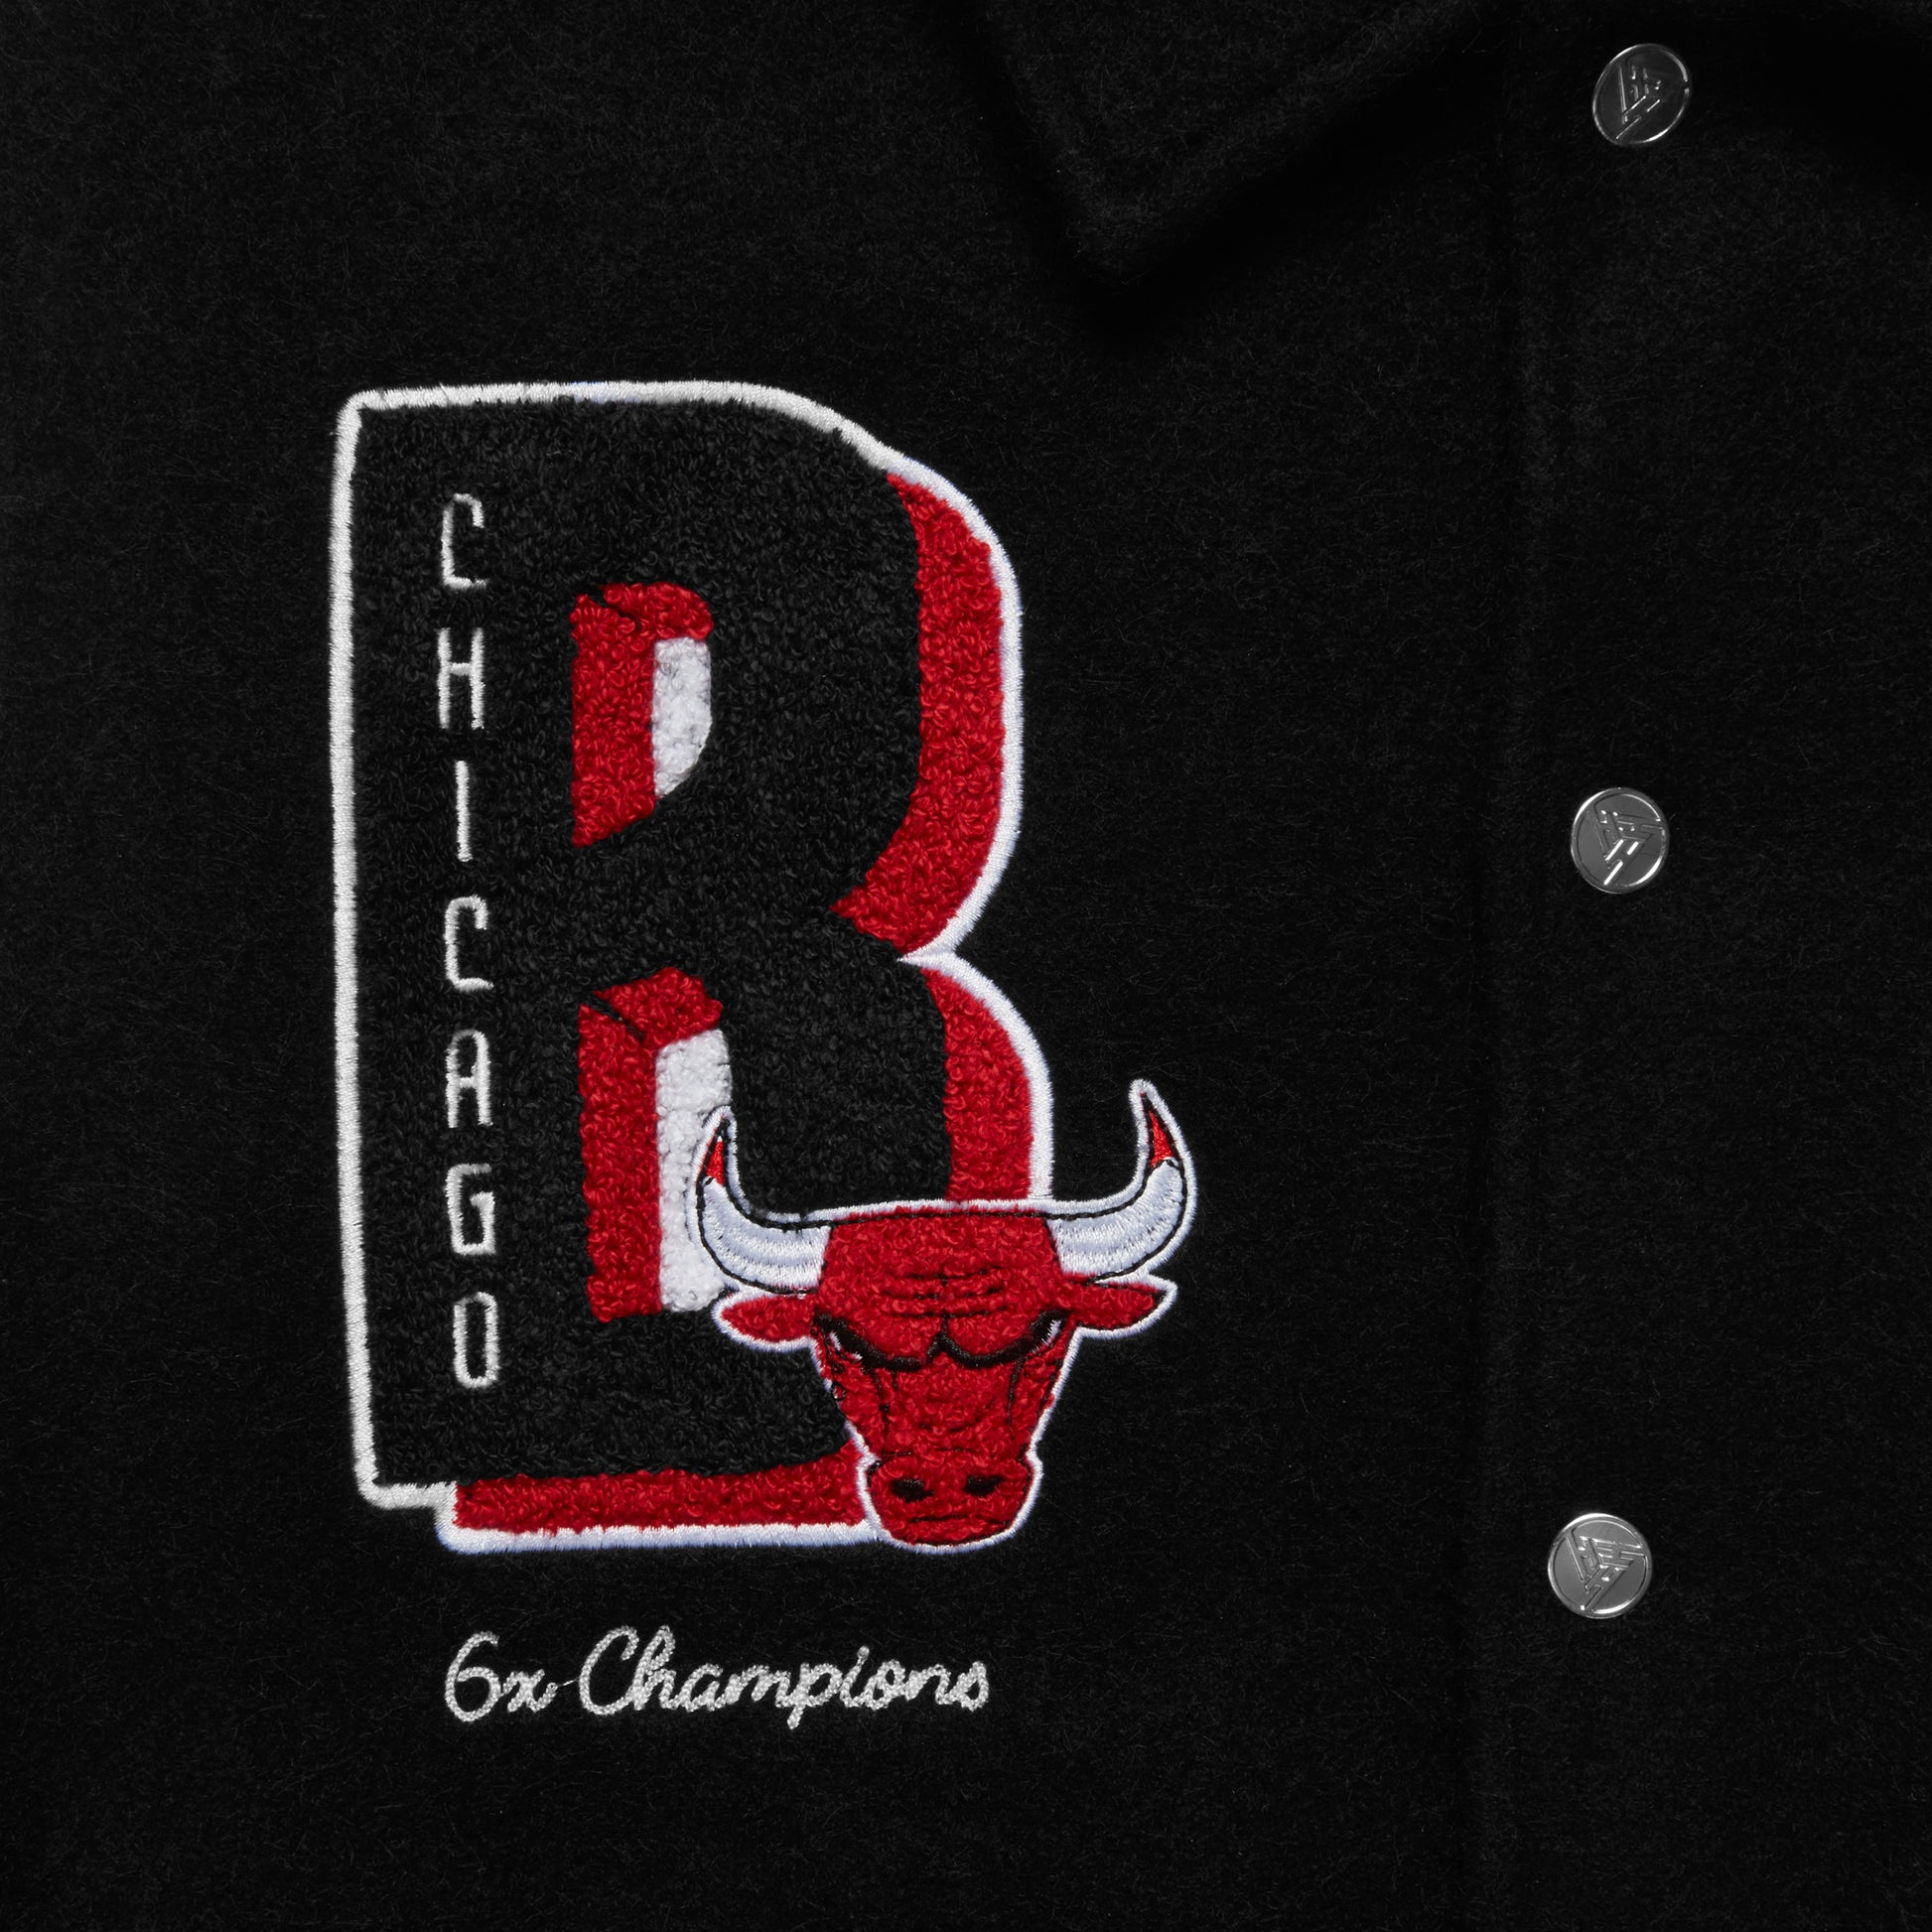 Chicago Bulls Red/Black Varsity Jacket